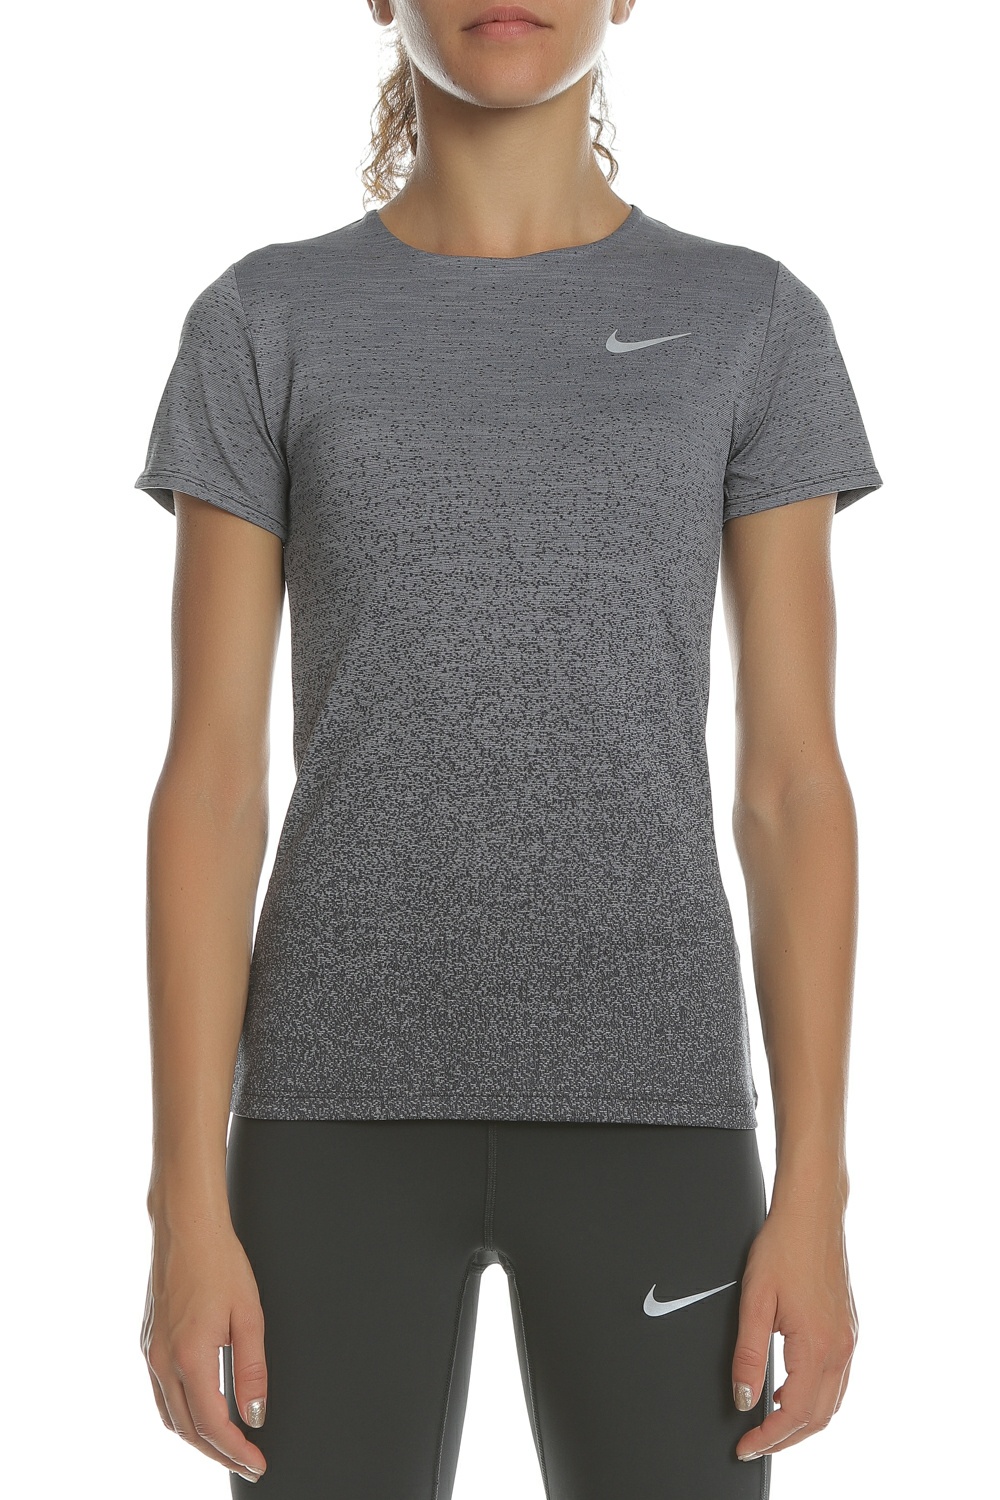 NIKE - Γυναικεία μπλούζα running Nike DRY MEDALIST ανθρακί Γυναικεία/Ρούχα/Αθλητικά/T-shirt-Τοπ